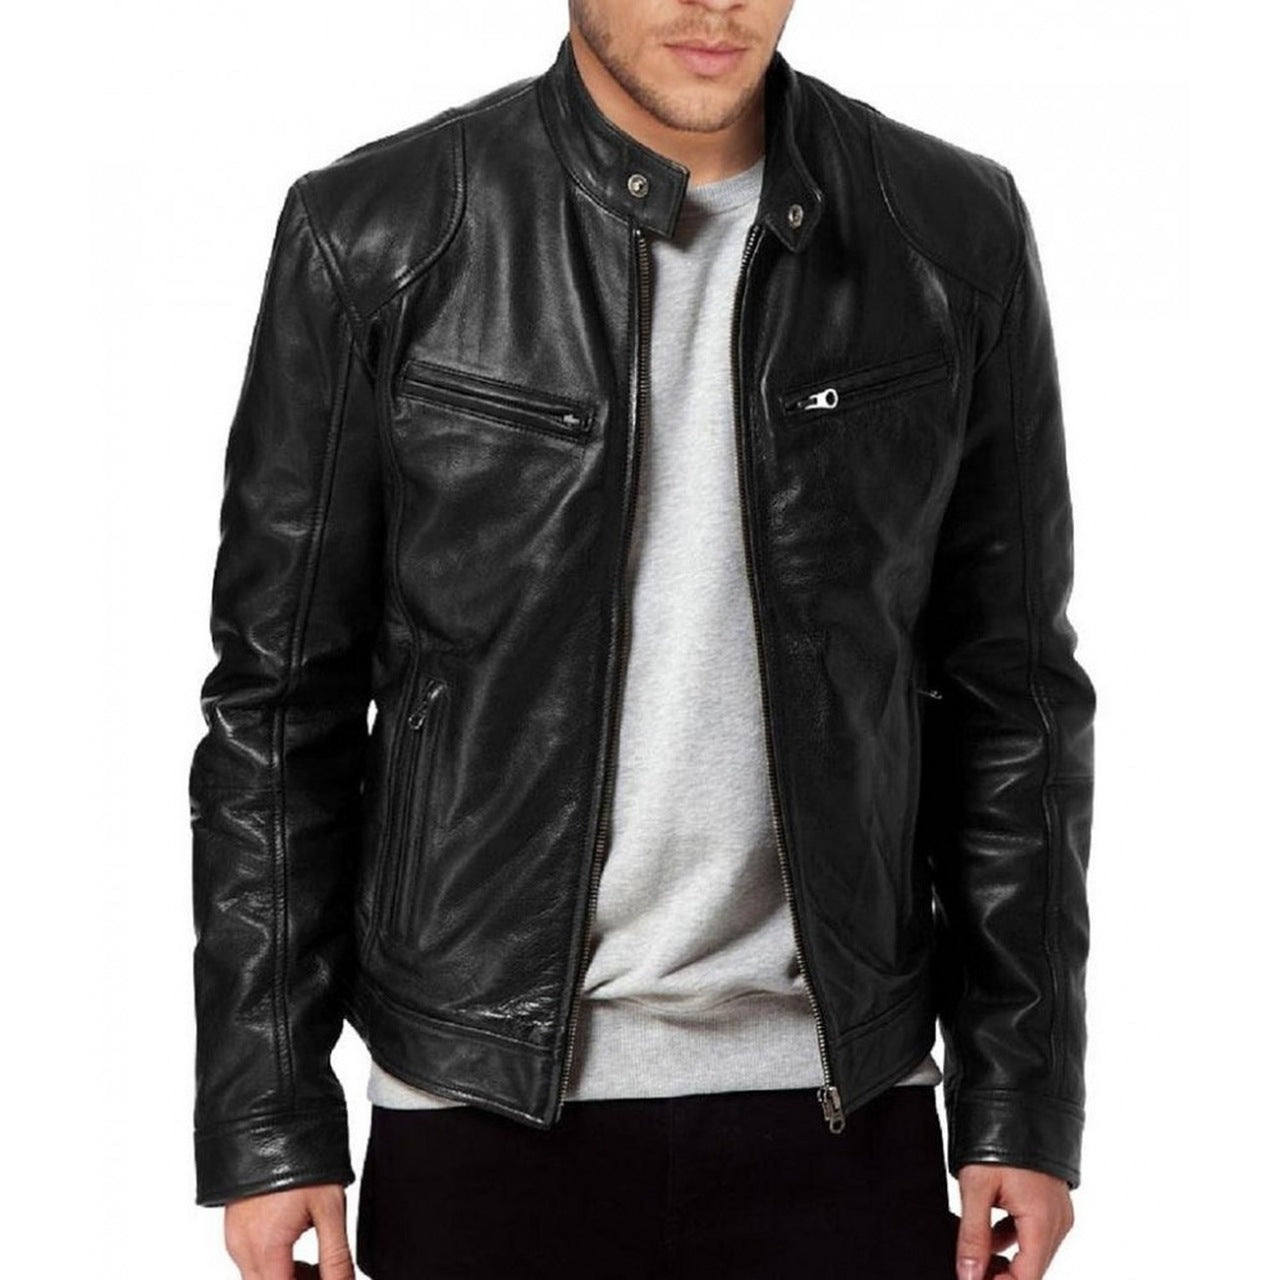 Mens Leather Jackets For Sale - 100% Genuine Leather Jacket For Men